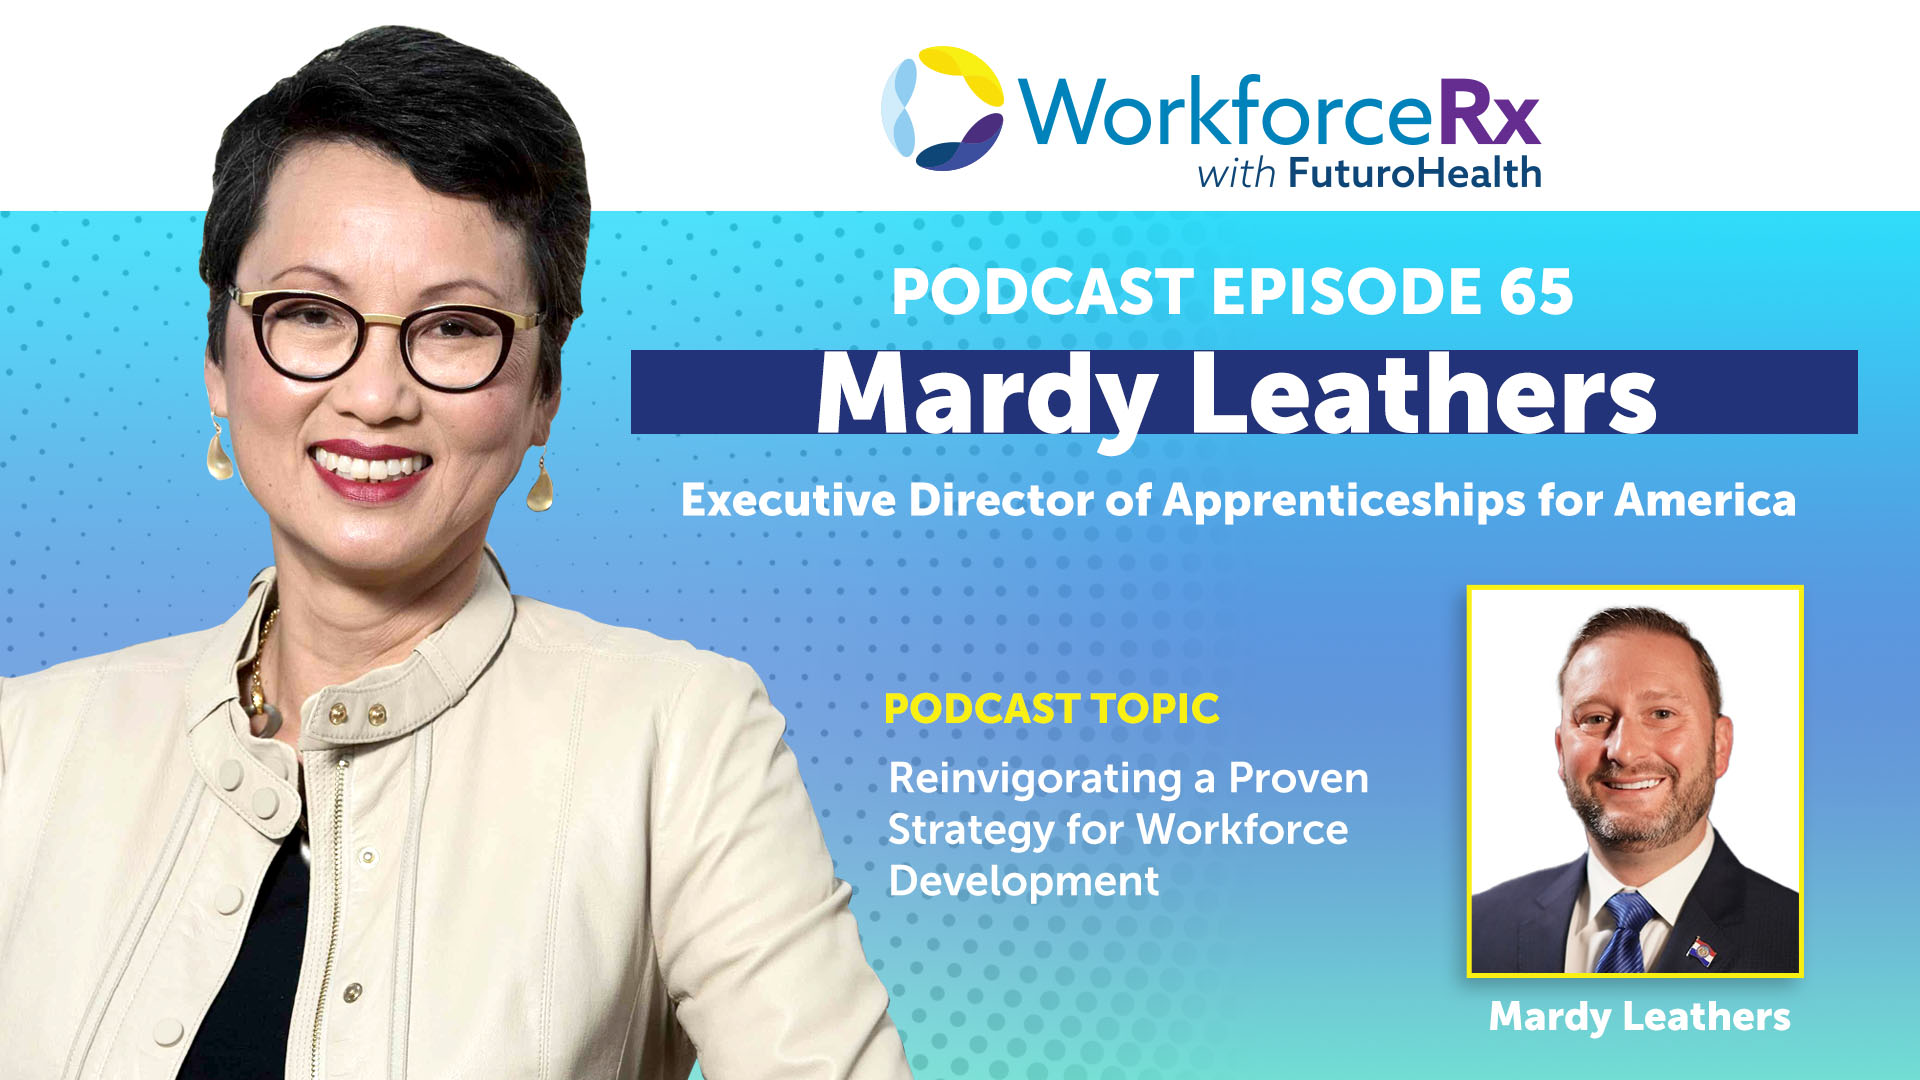 EP65 WorkforceRx Podcast Mardy Leathers